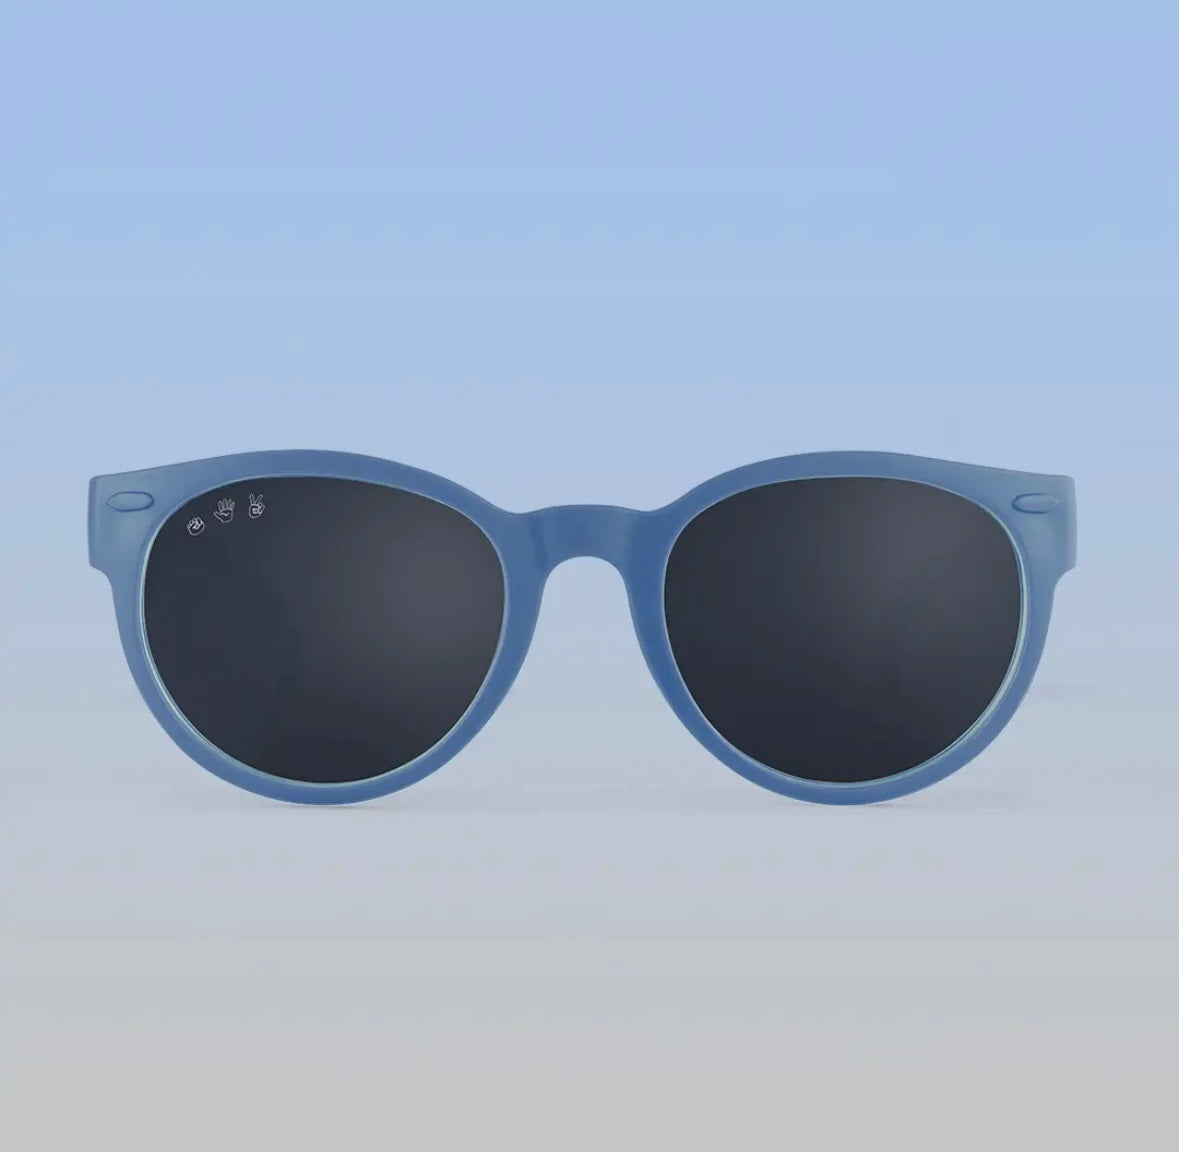 Roshambo Junior Sunglasses - Skywalker Cloudy Blue, Grey Lens